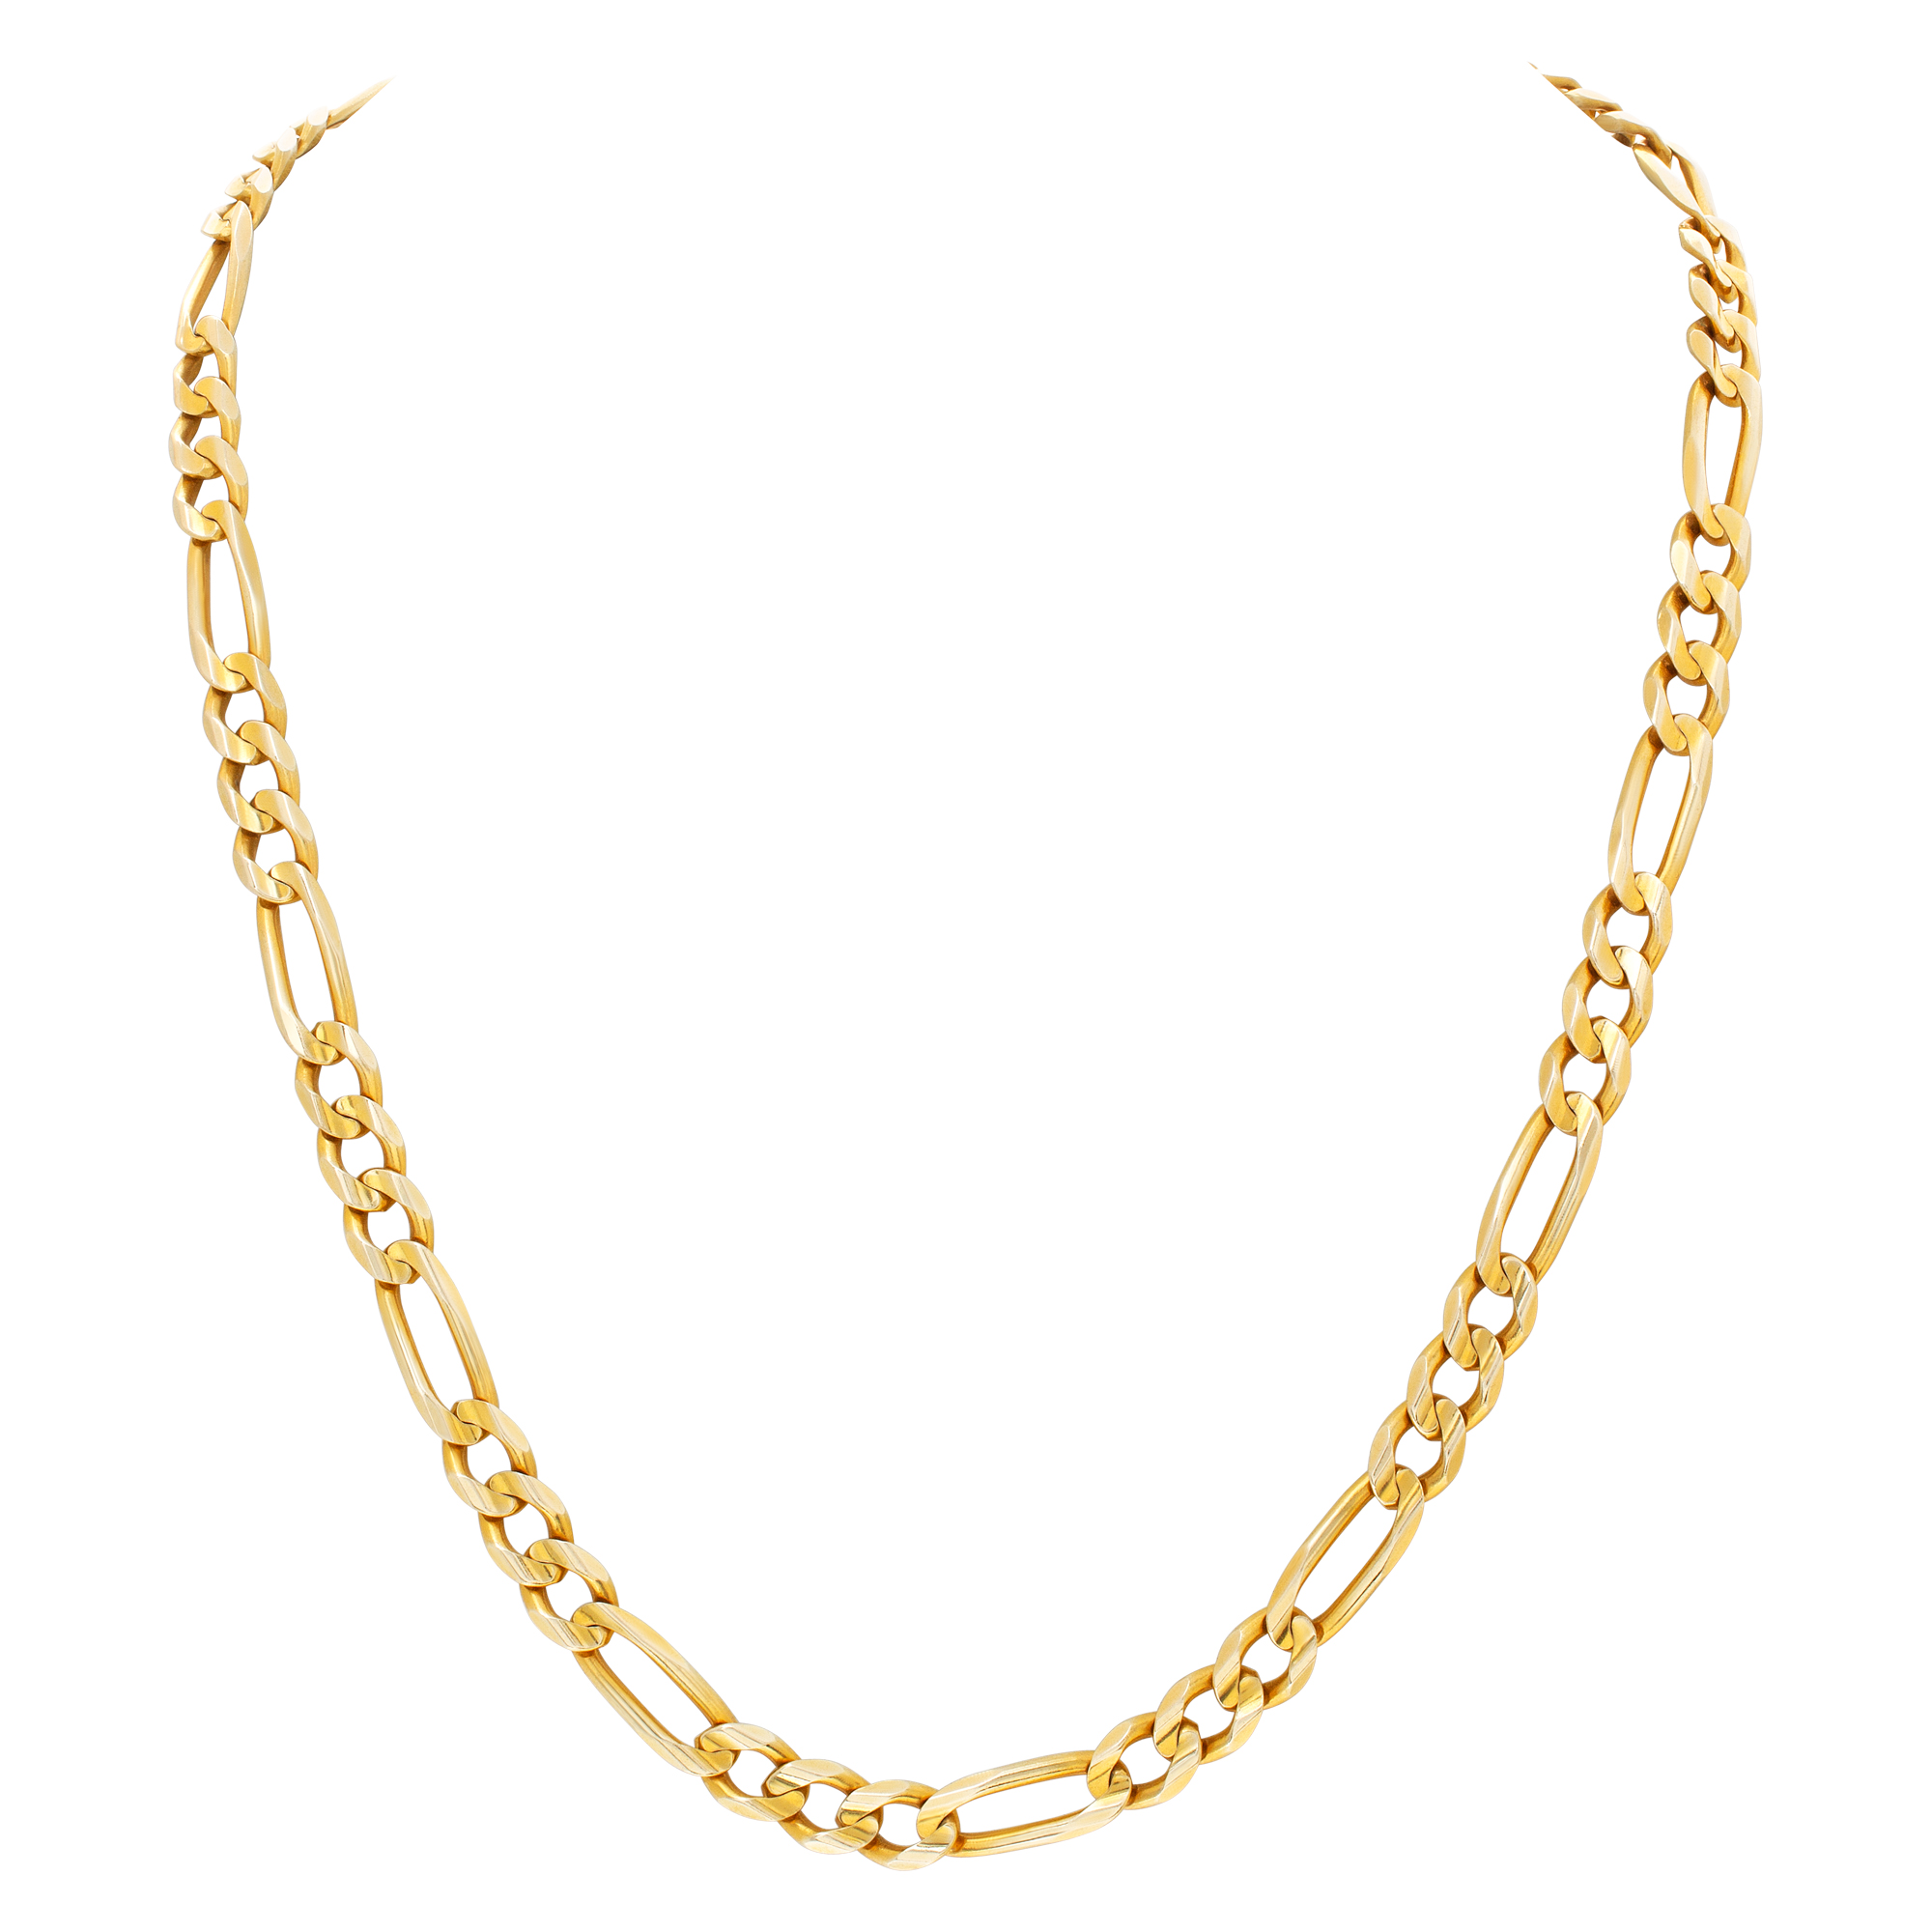 Figaro link necklace in 14k, 20"